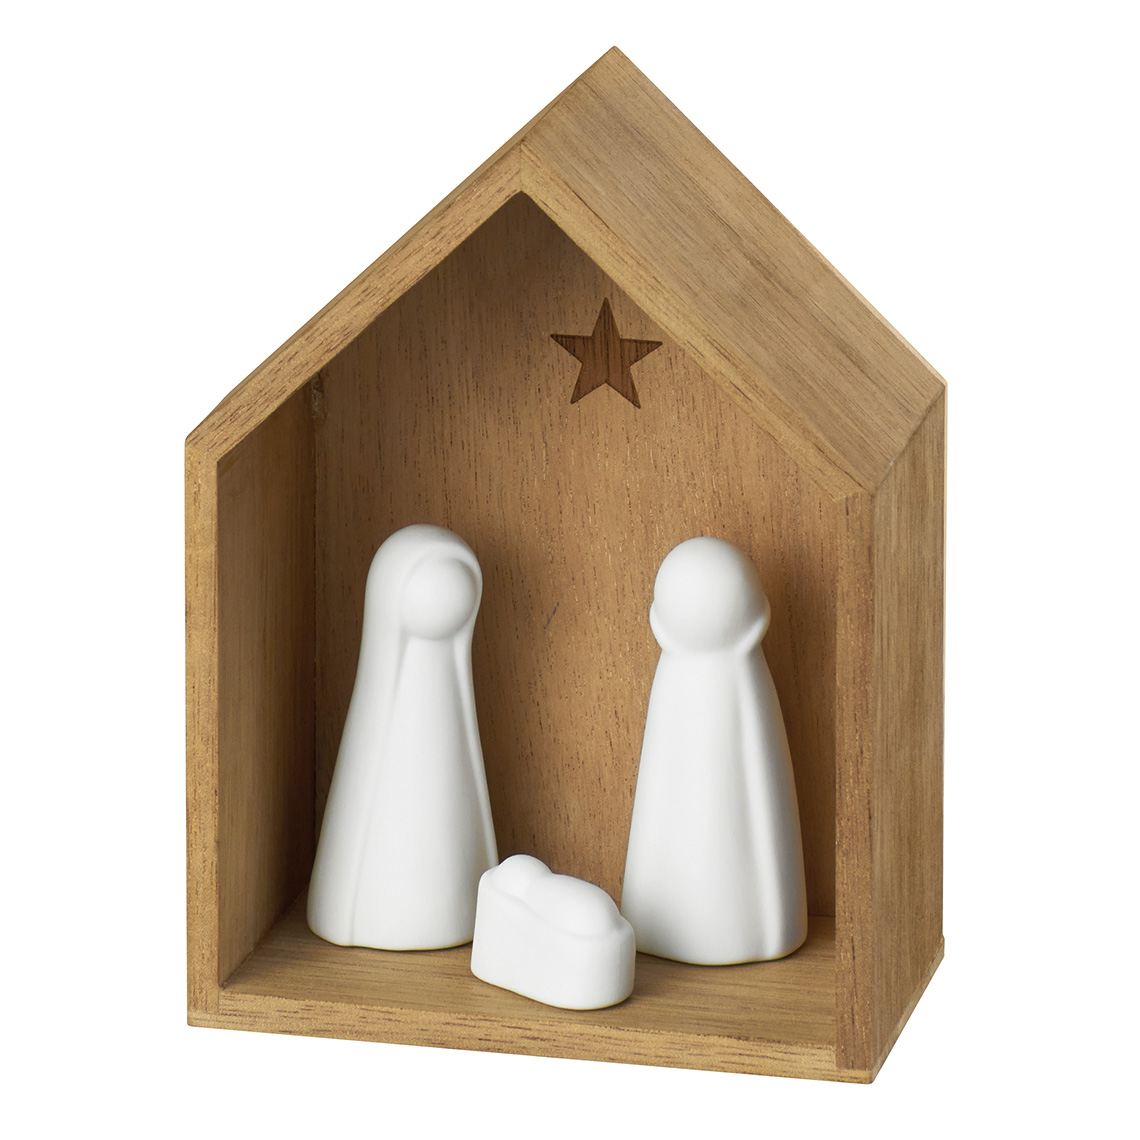 Little nativity set